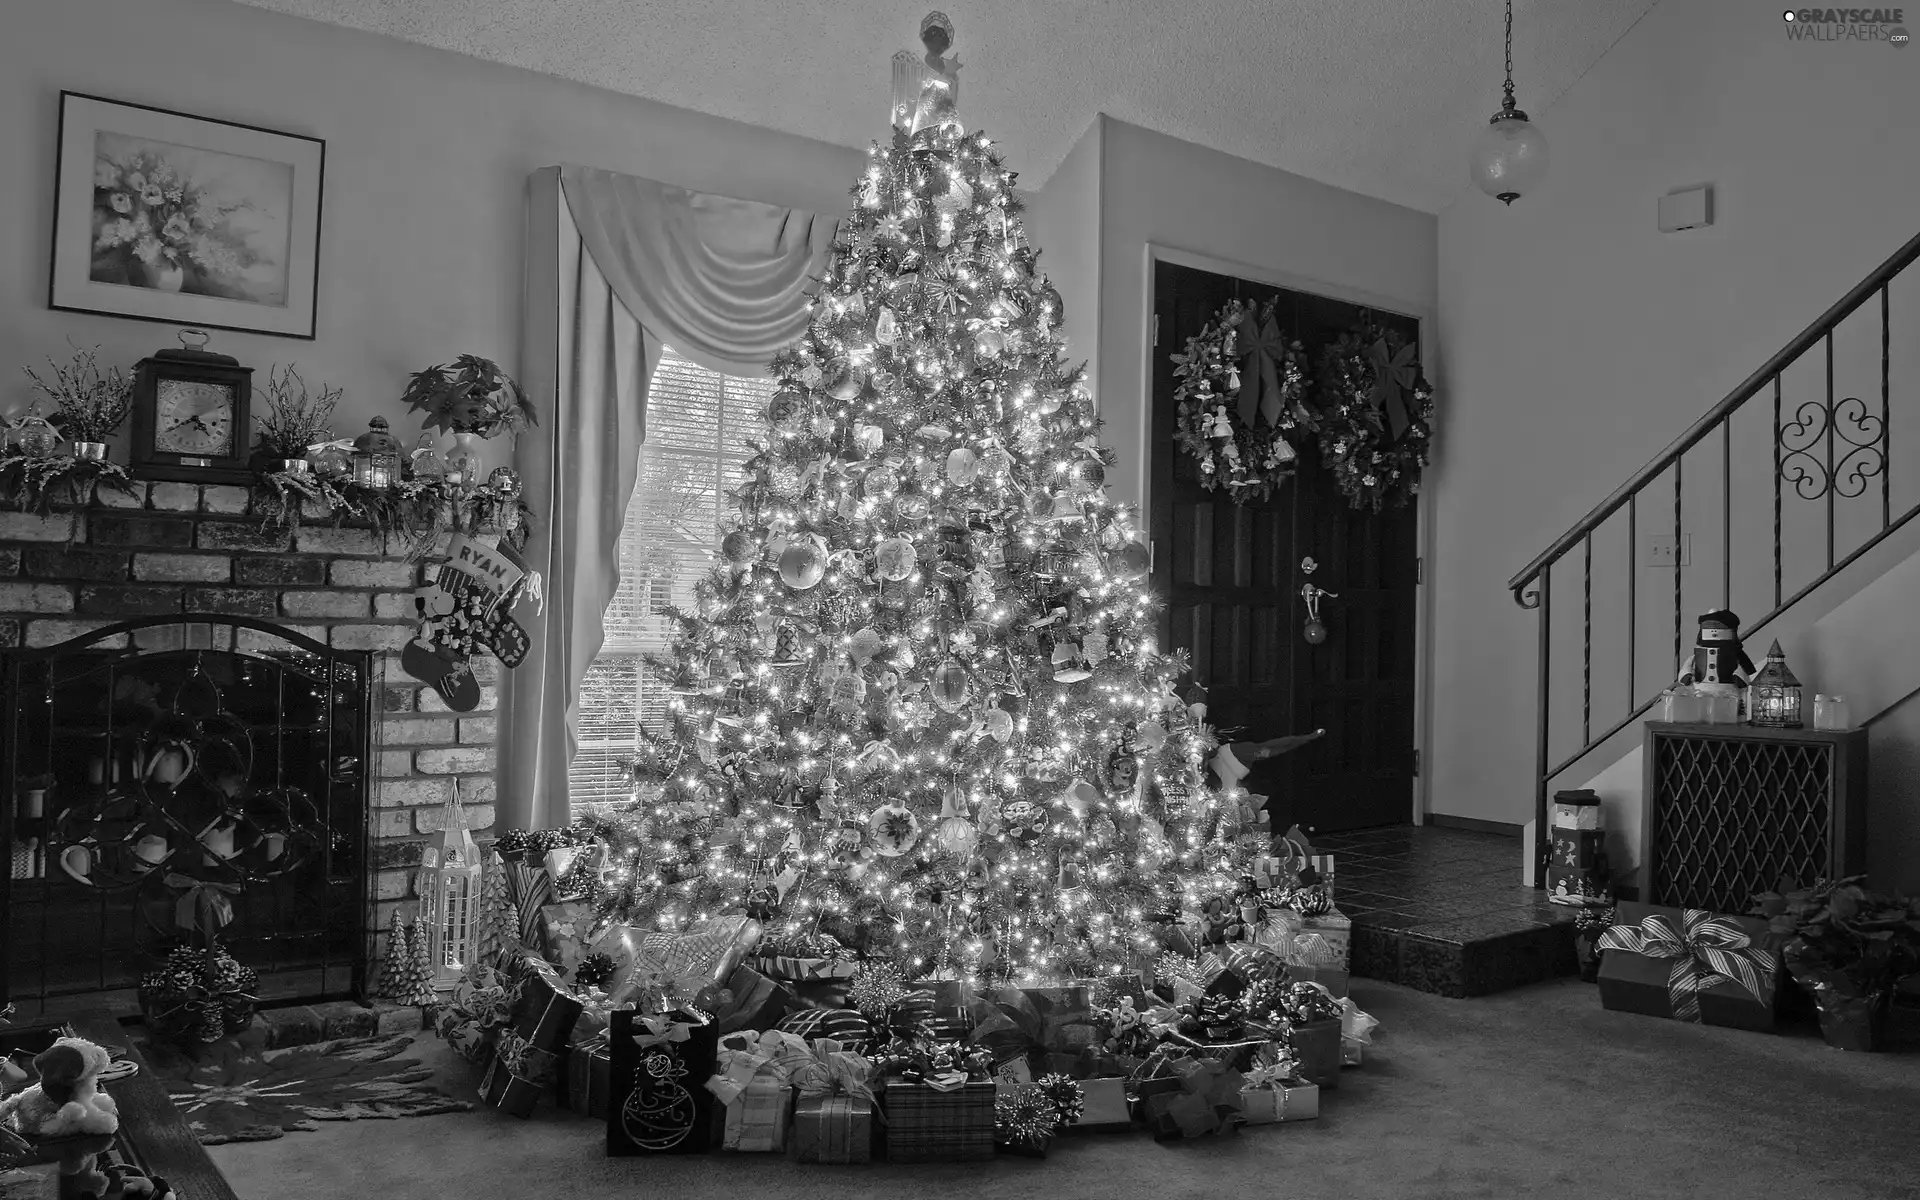 burner chimney, christmas tree, gifts